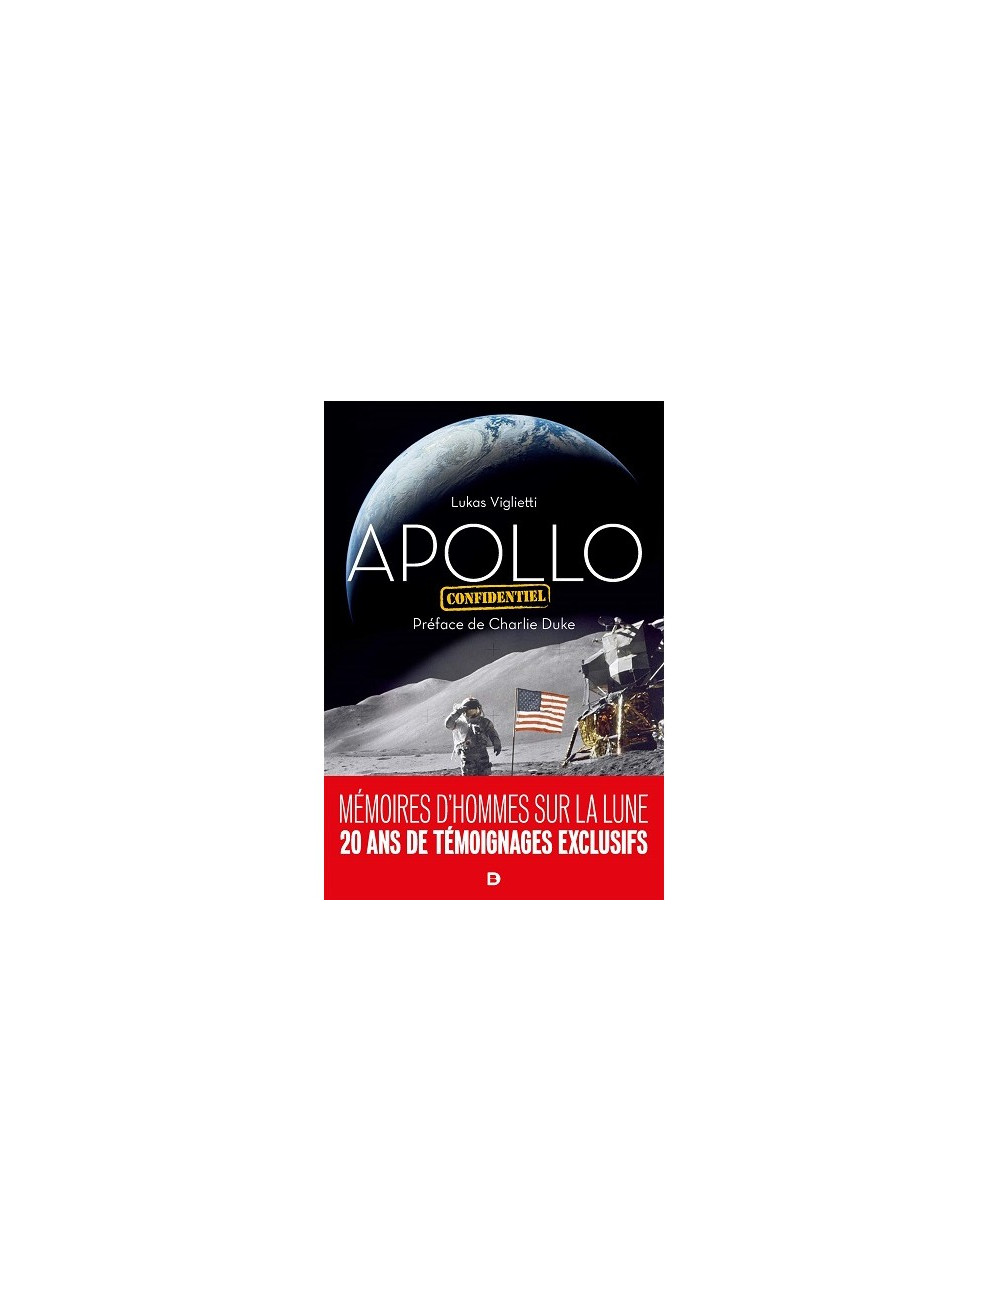 Apollo confidentiel